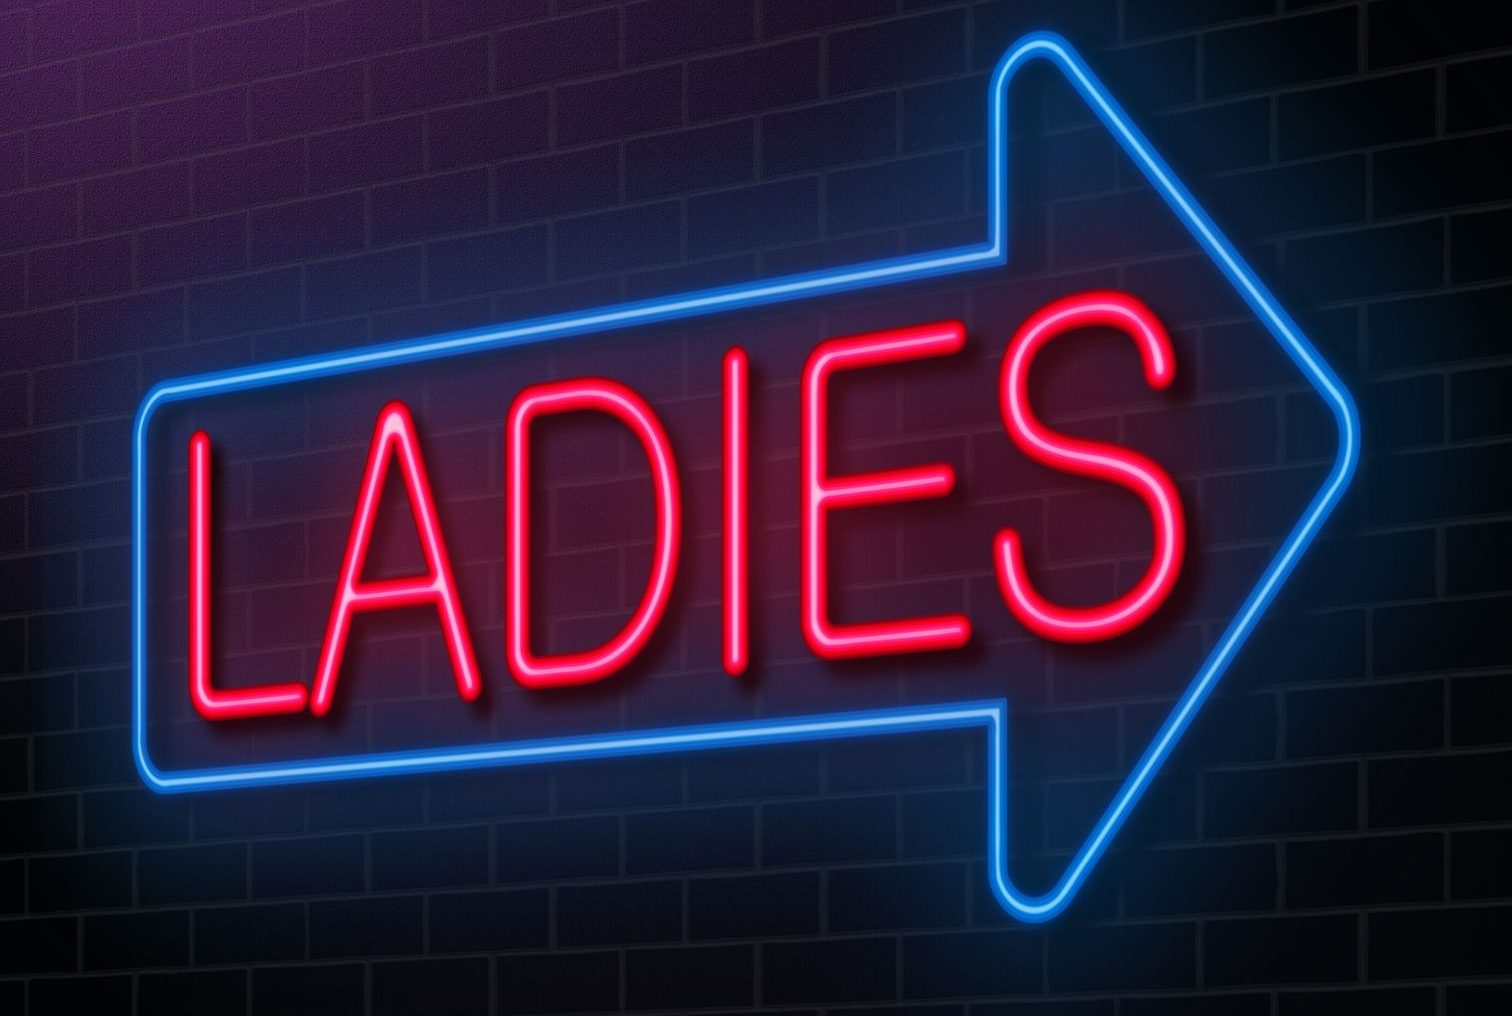 illuminated arrow sign depicting the word ladies